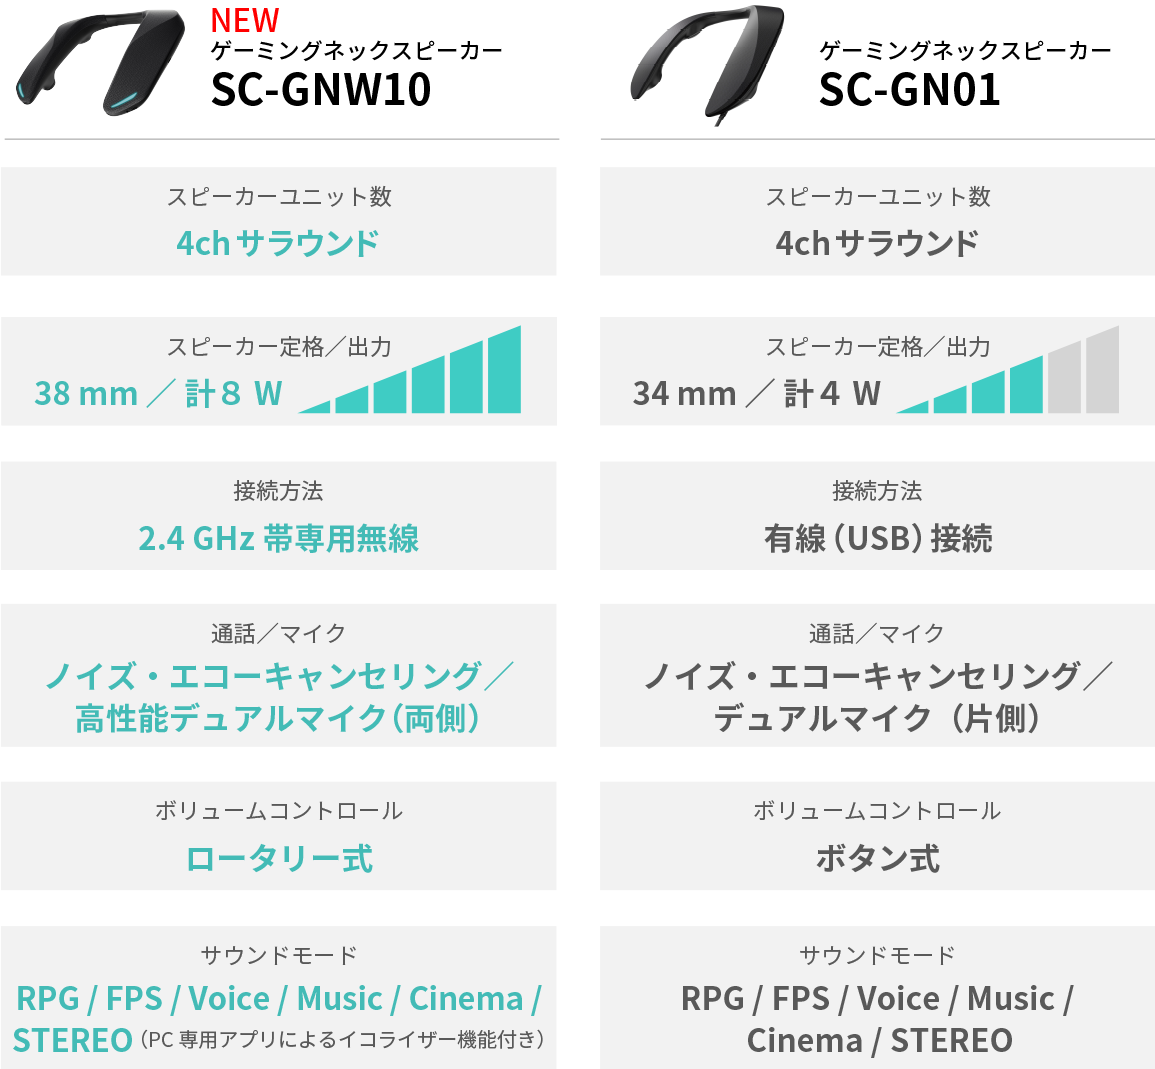 SC-GNW10,SC-GN01 スペック比較